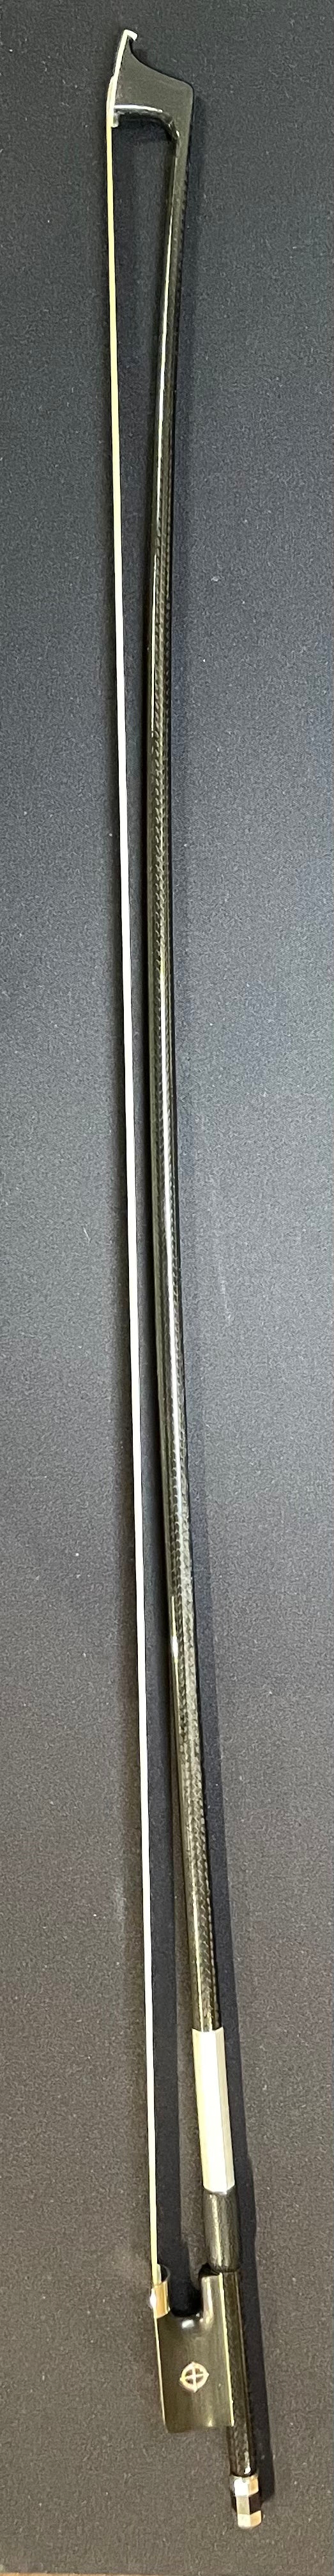 Full Size Viola Bow - Carbon Fiber CodaBow Diamond SX Model